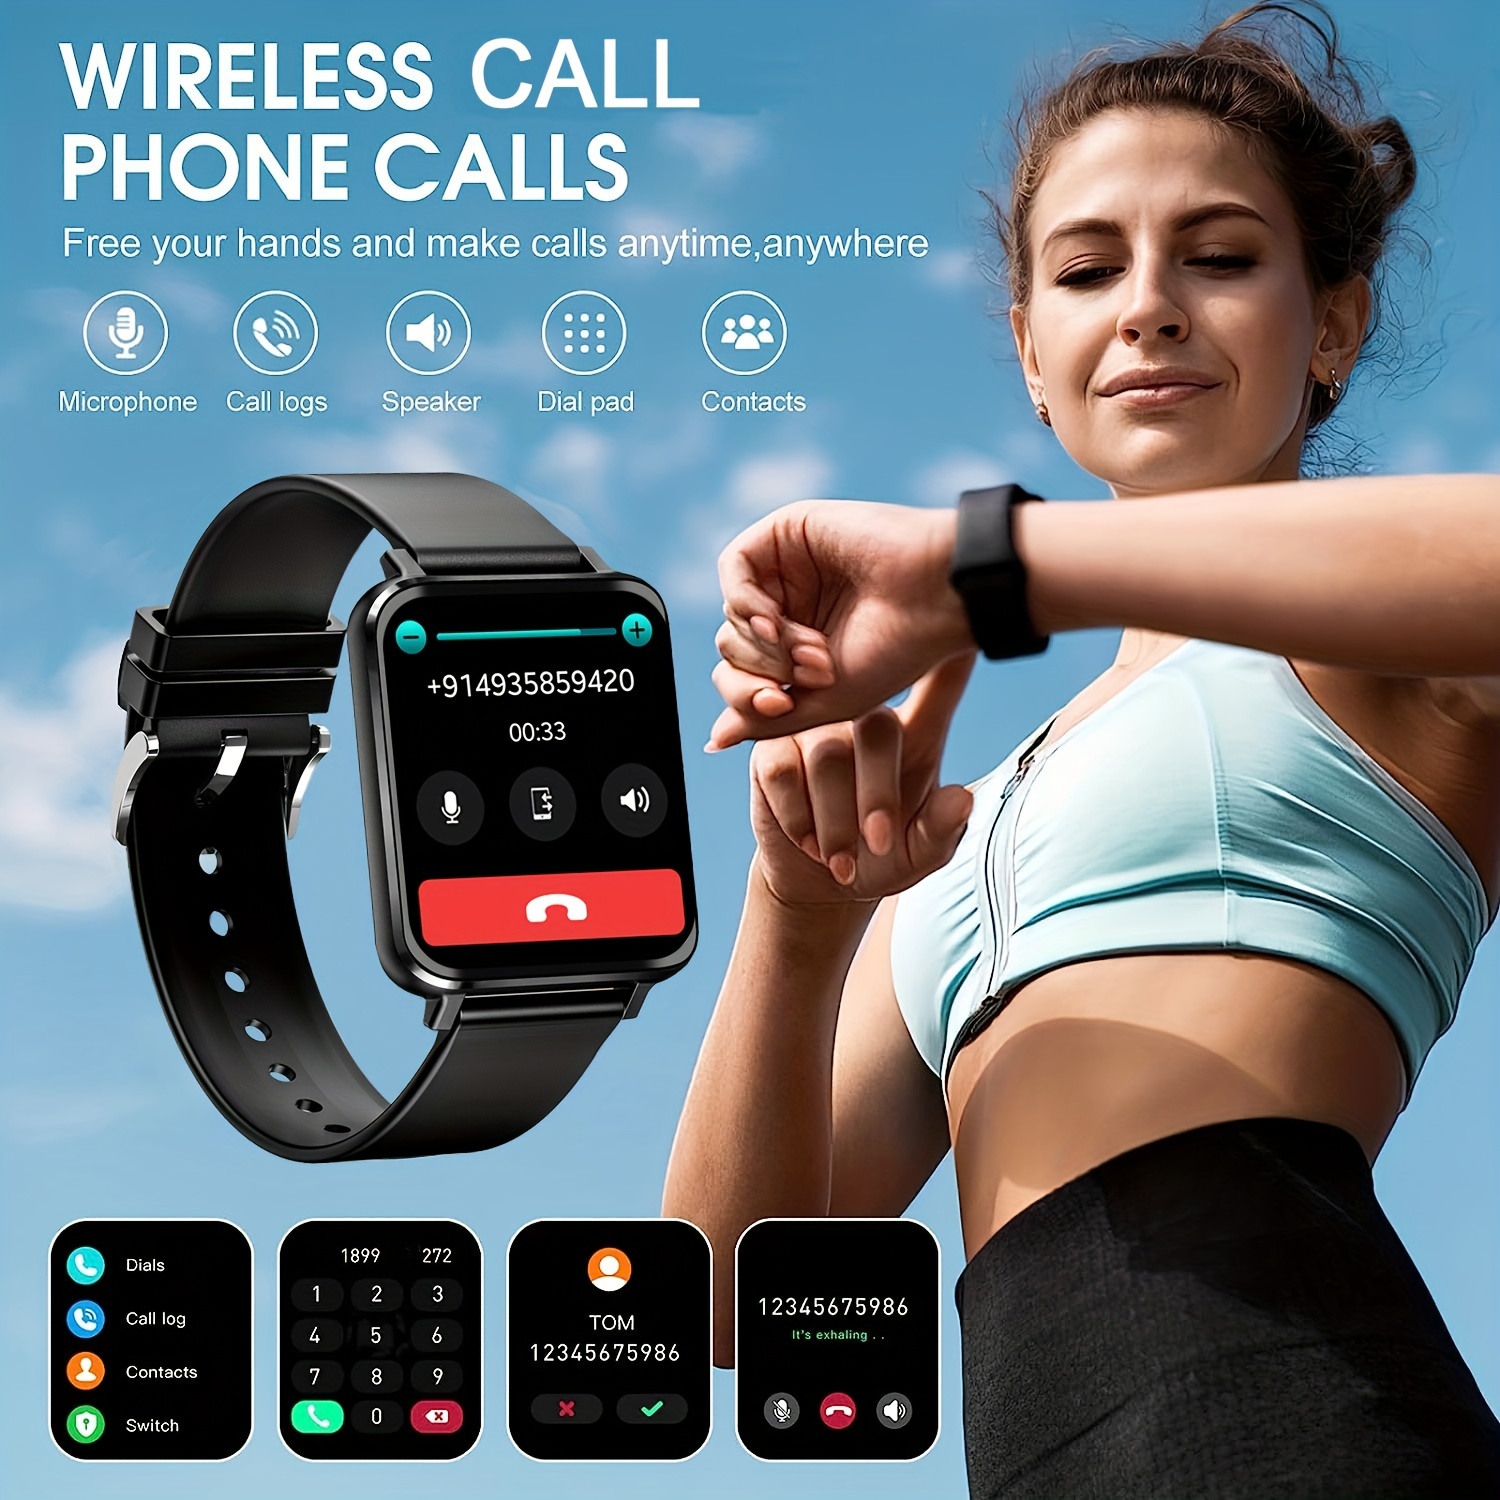 ENOMIR Smart Watch for Men Women(Answer/Make Call), Alexa Built-in,Fitness  Watch with Heart Rate SpO2 Sleep Monitor 100 Sports 5ATM Waterproof